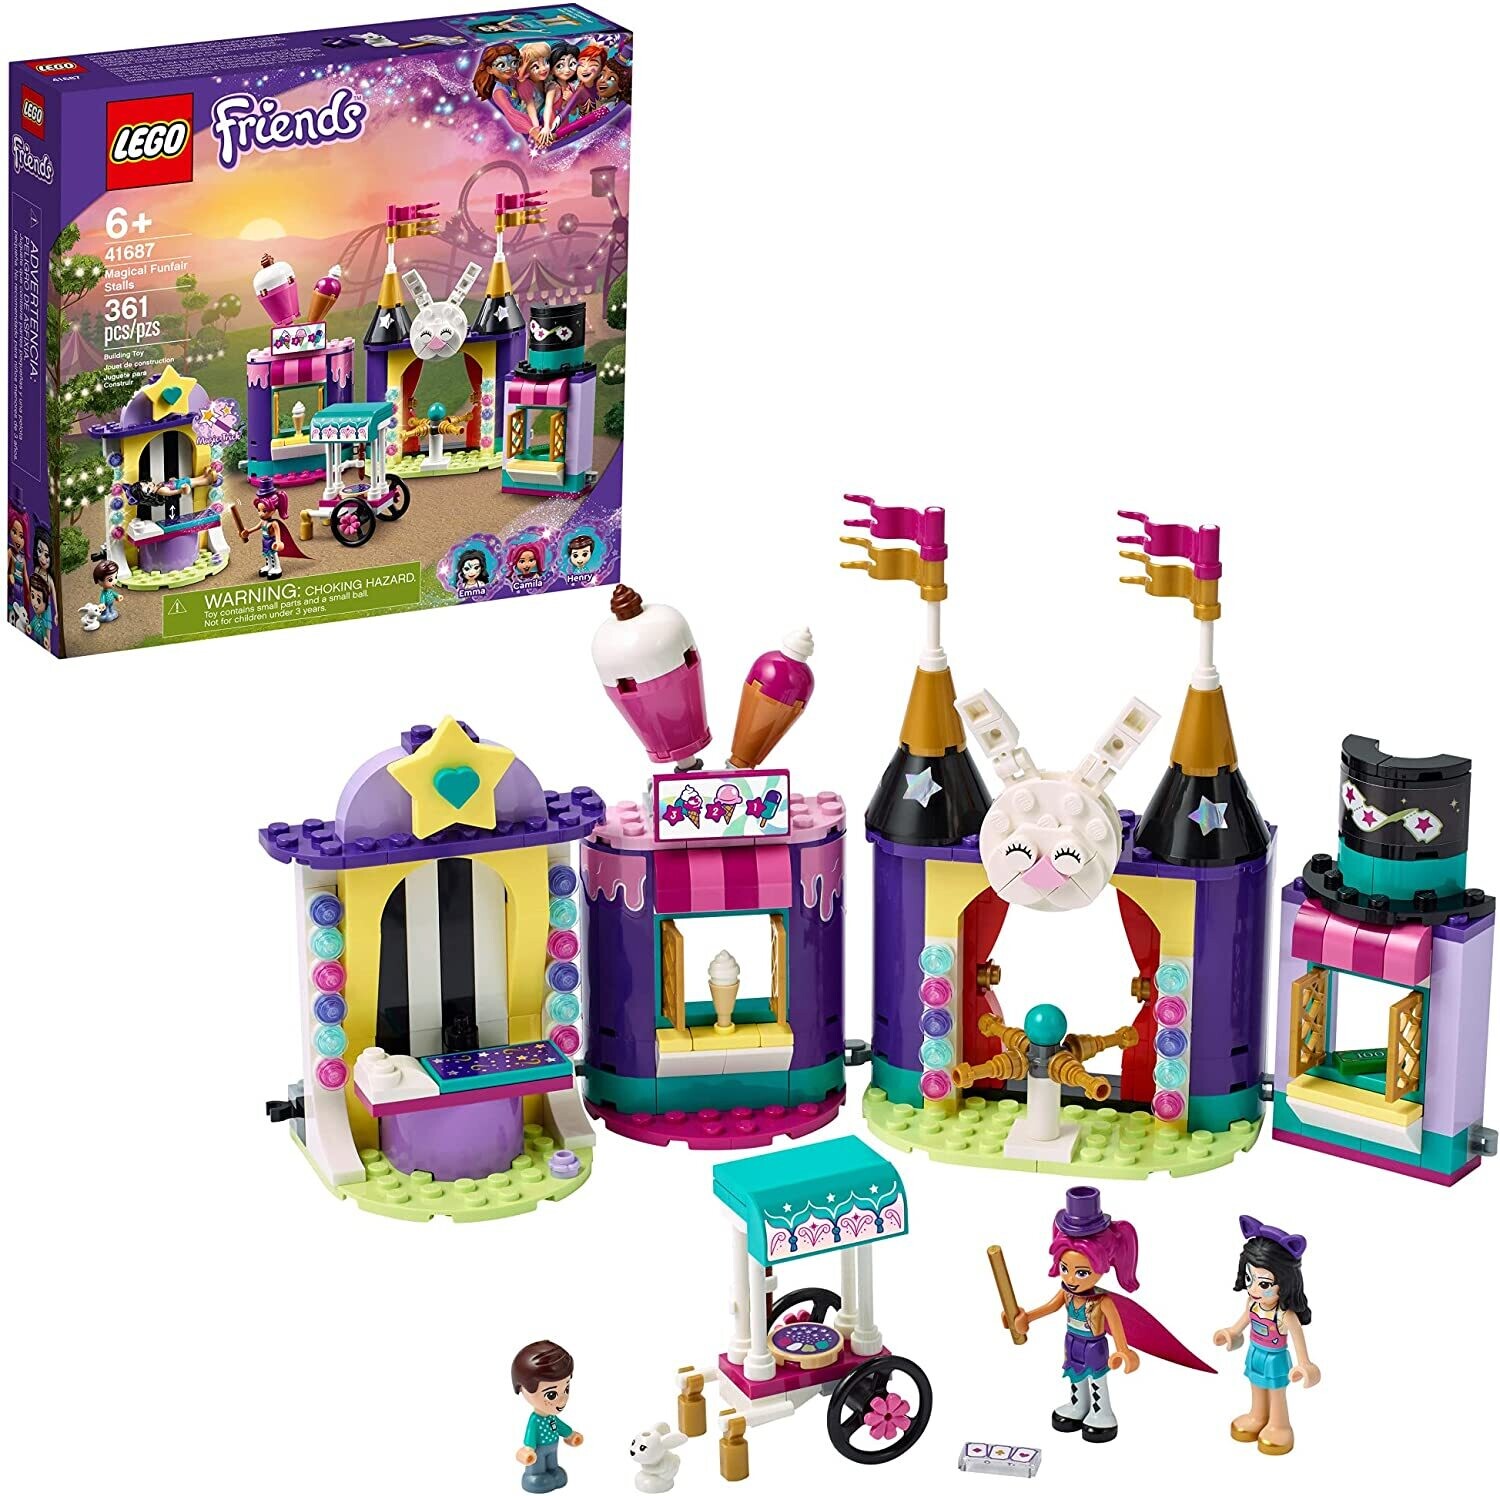 LEGO 41687 Magical Funfair Stalls